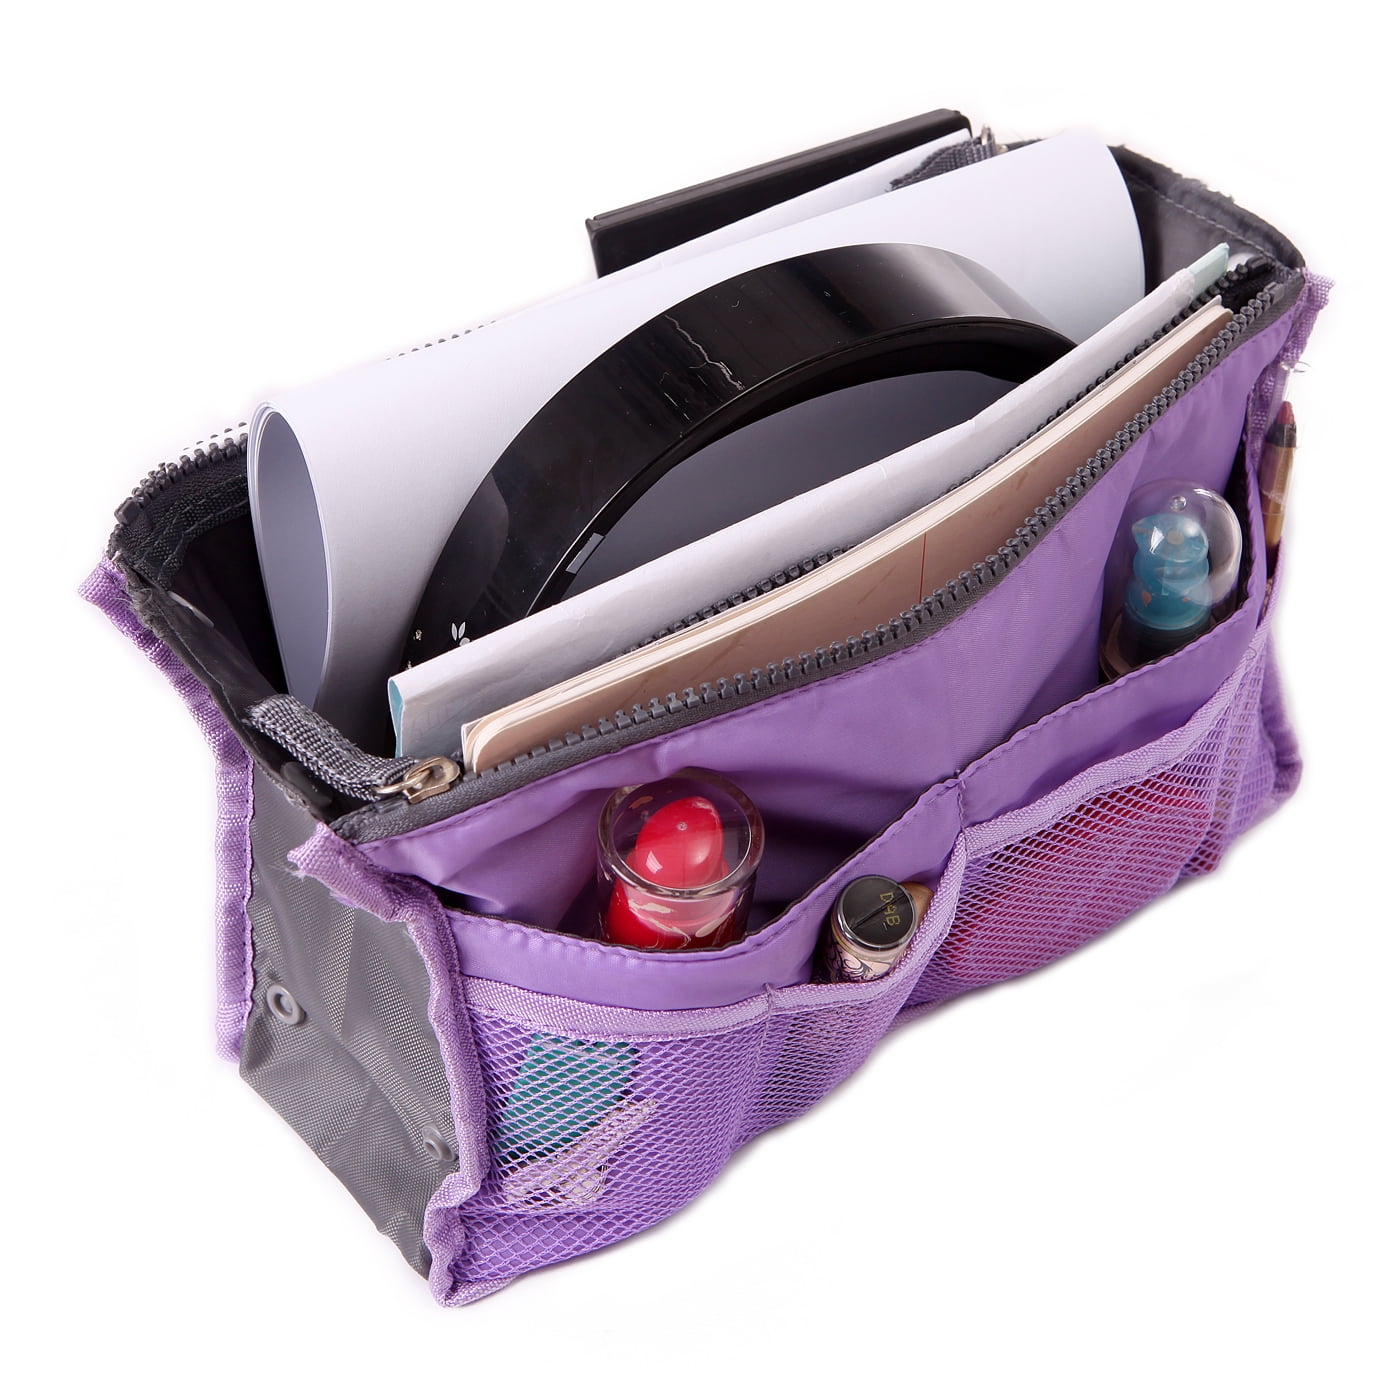 Hde Expandable 13 Pocket Handbag Insert Purse Organizer with Handles (Black)